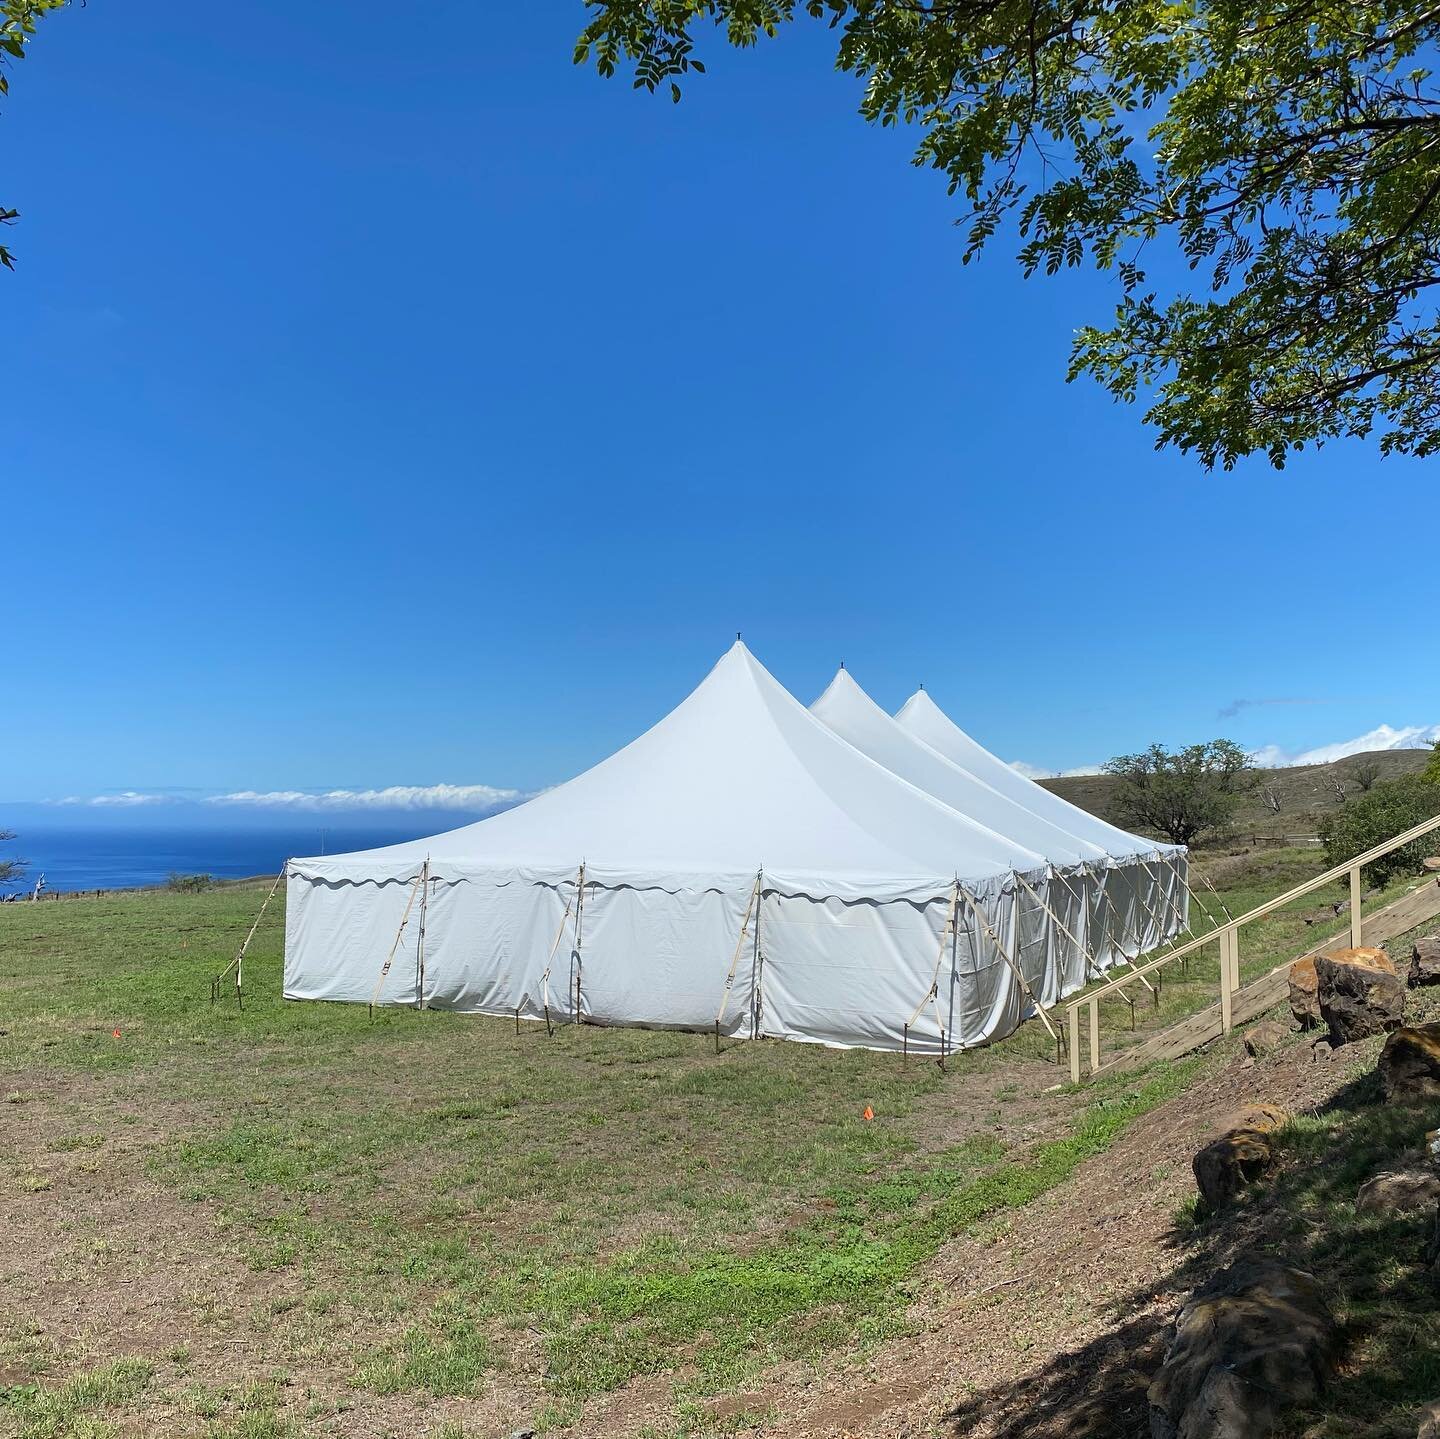 40x pole tent for meeting at Kohala ranch. @bigislandtents #bigislandtents #hawaiievents #bit40xpoletent #kohalaranch